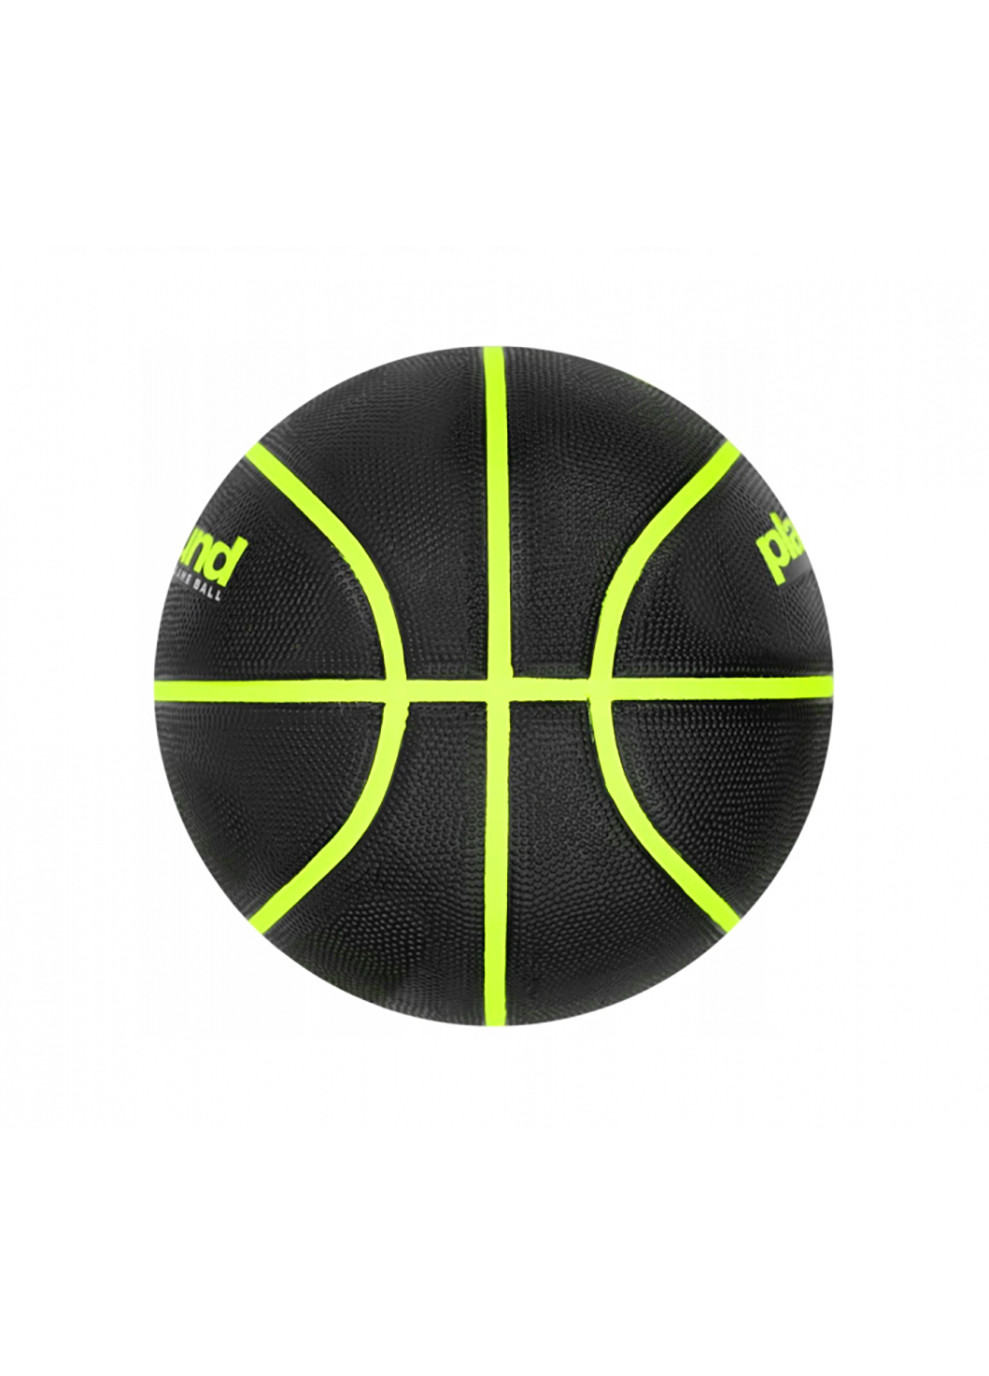 М'яч баскетбольний Everyday Playground 8P Deflated Size 7 Black / Volt (N.100.4498.085.07) Nike (253678247)